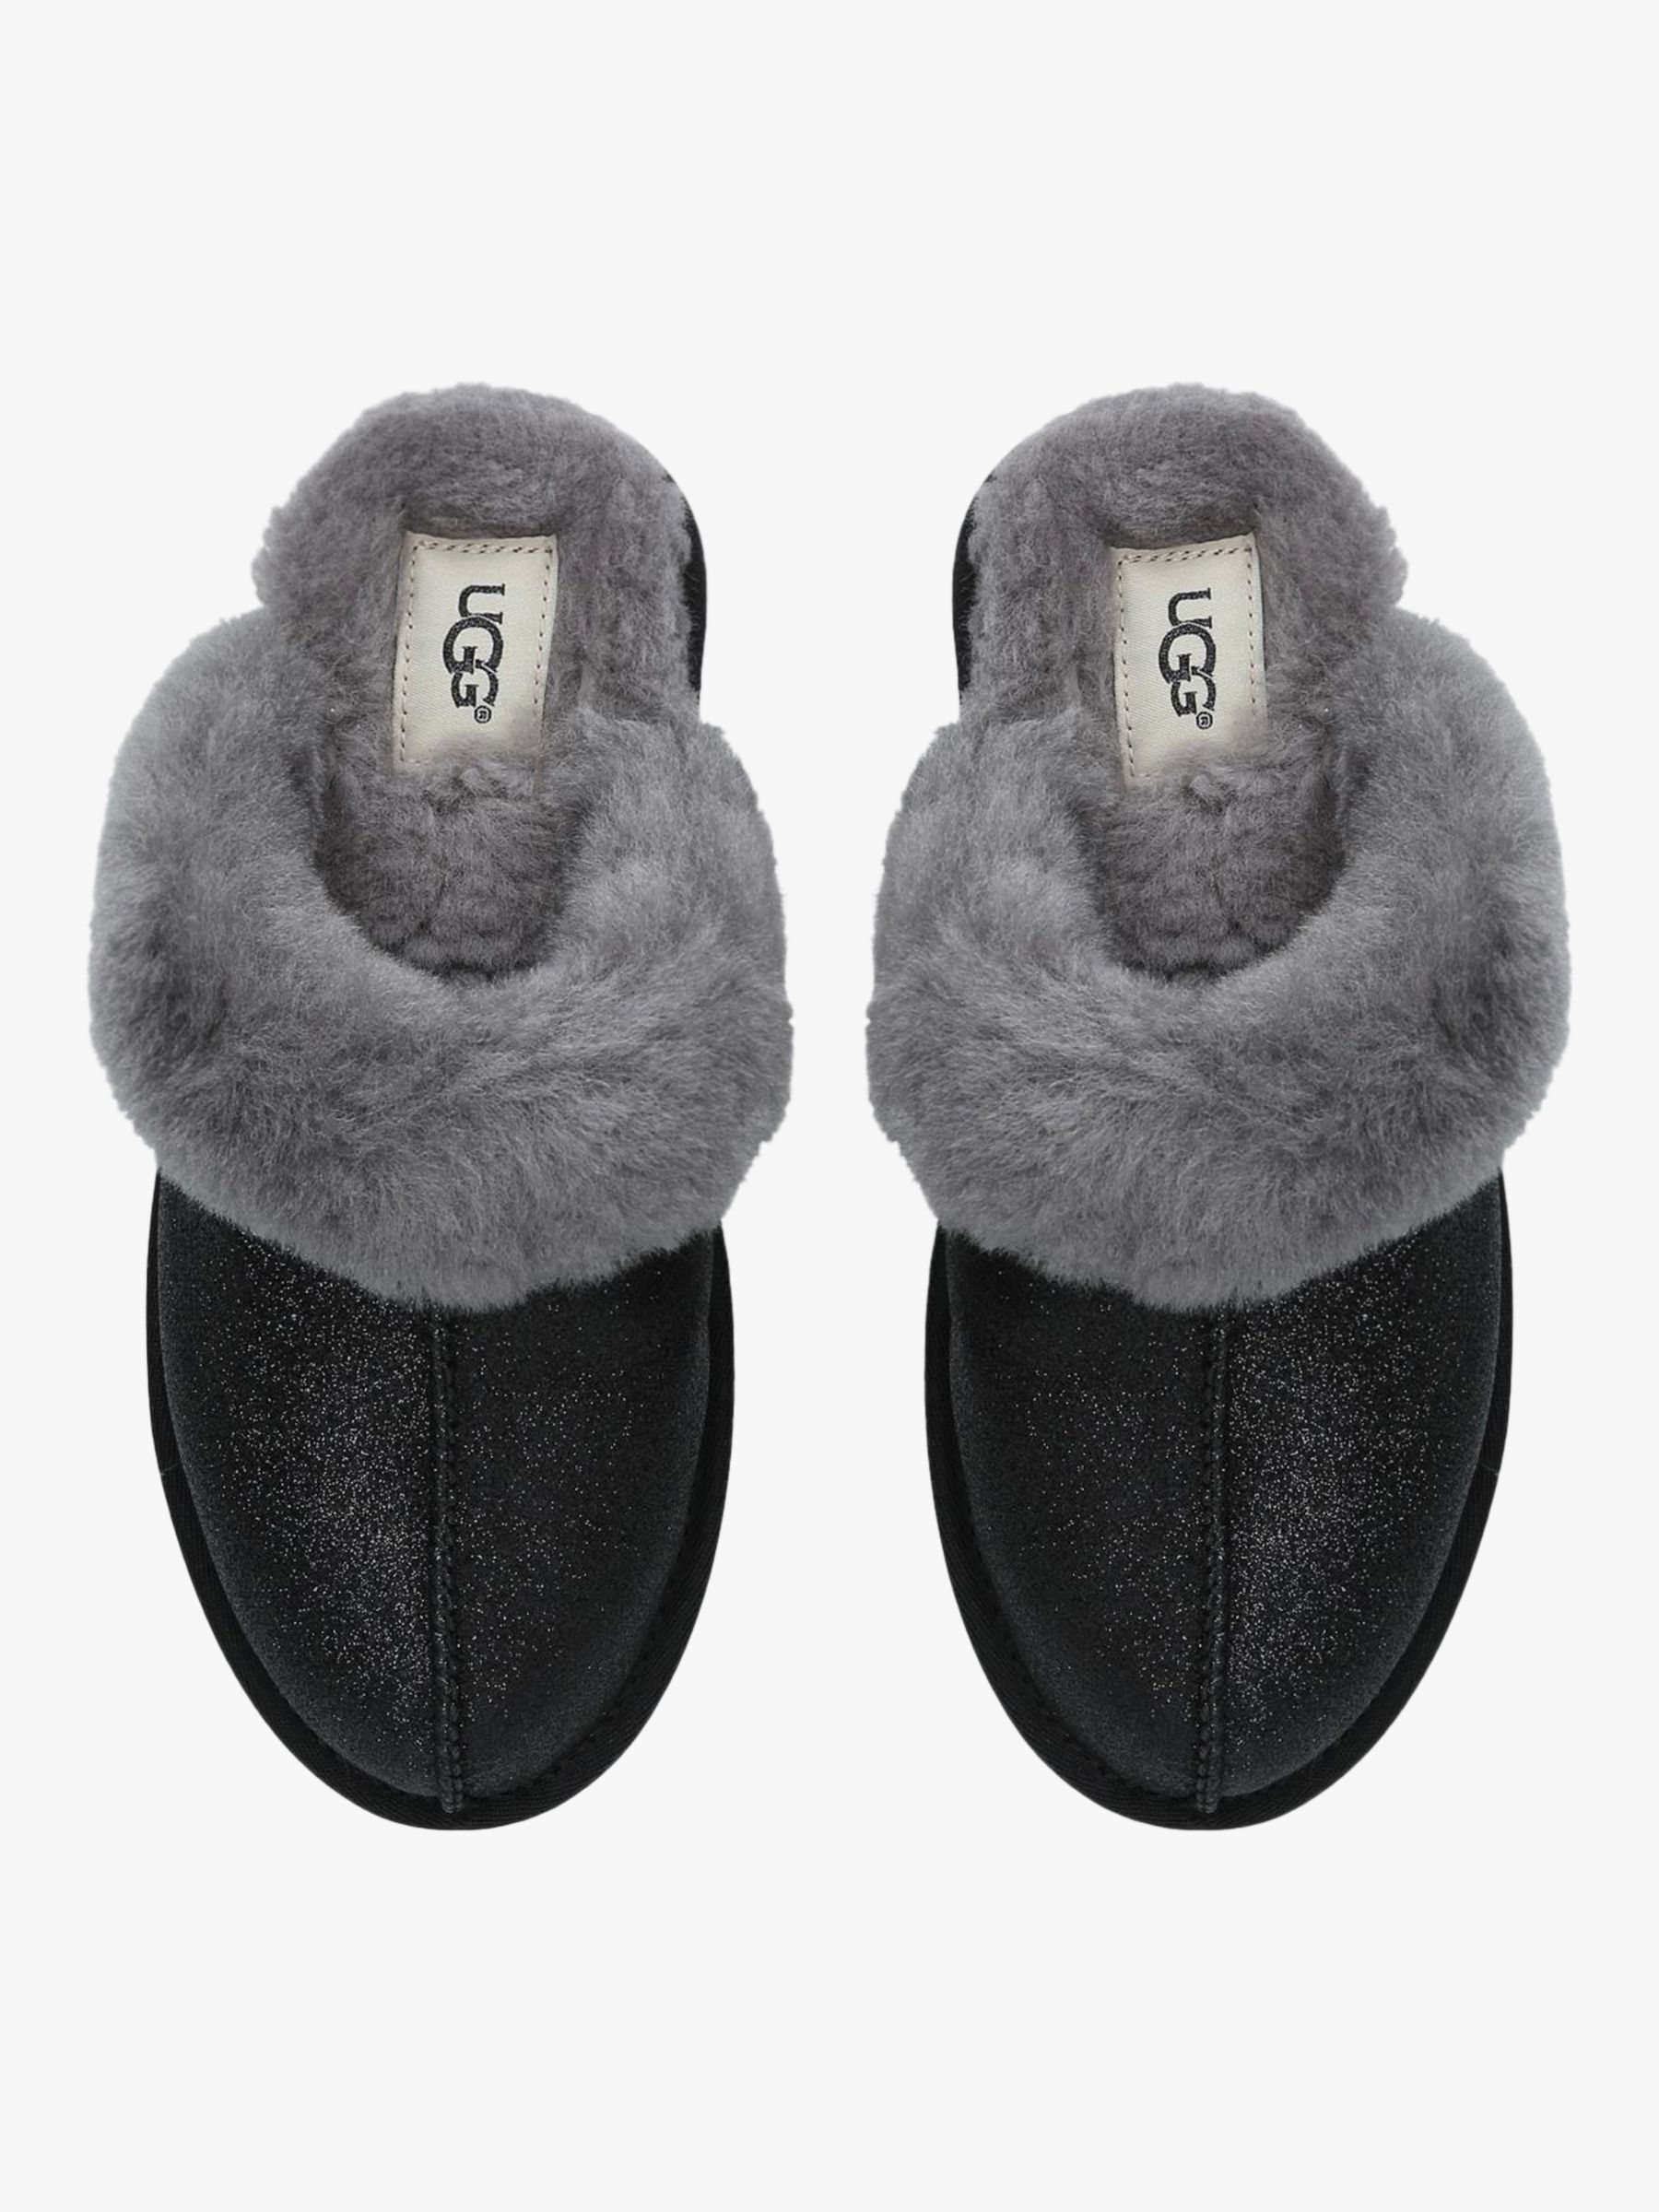 ugg scuffette slippers black